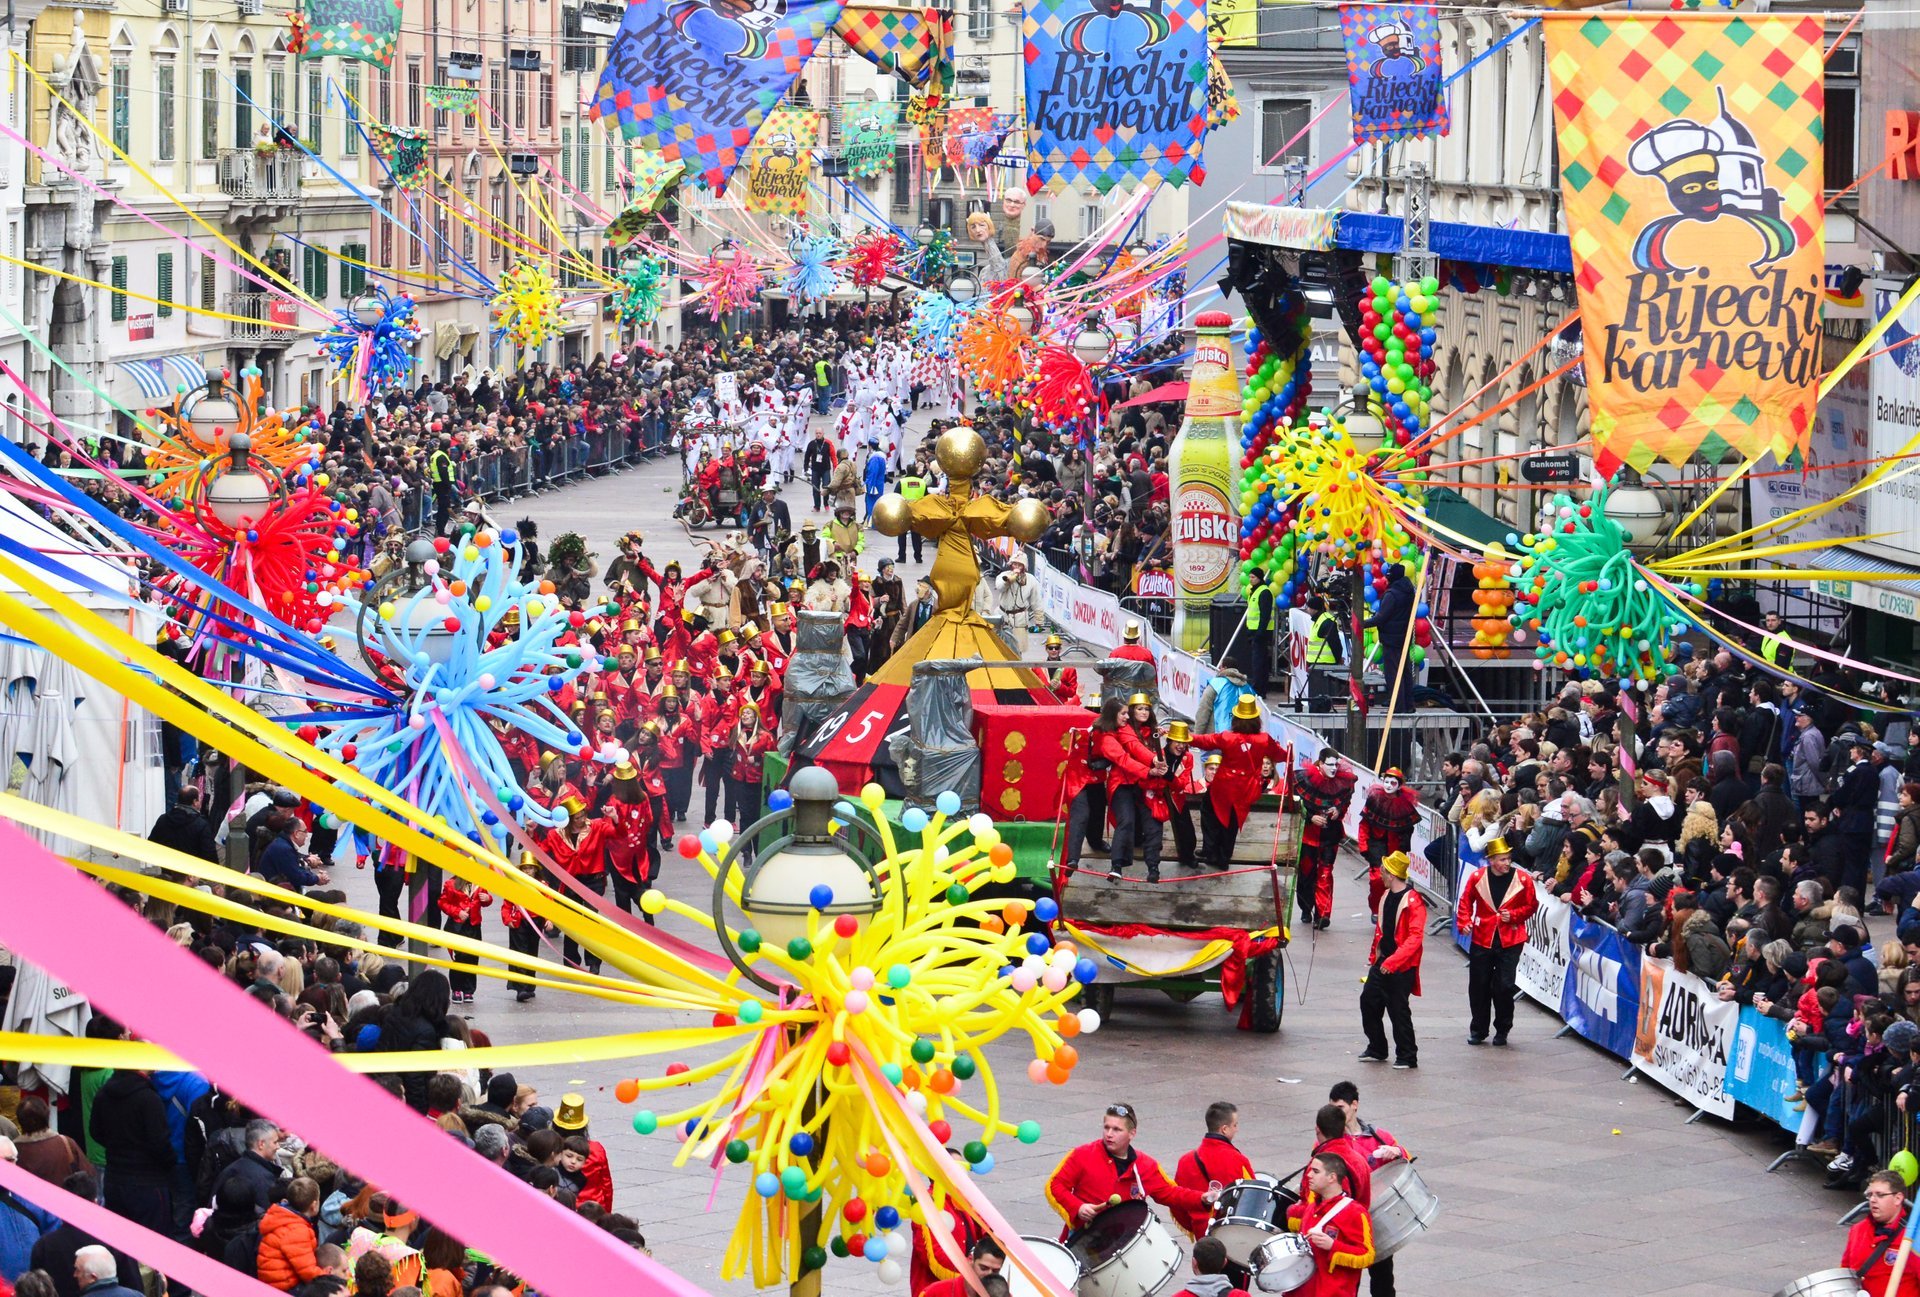 Oberbettingen karnevalsumzug 2022 dodge